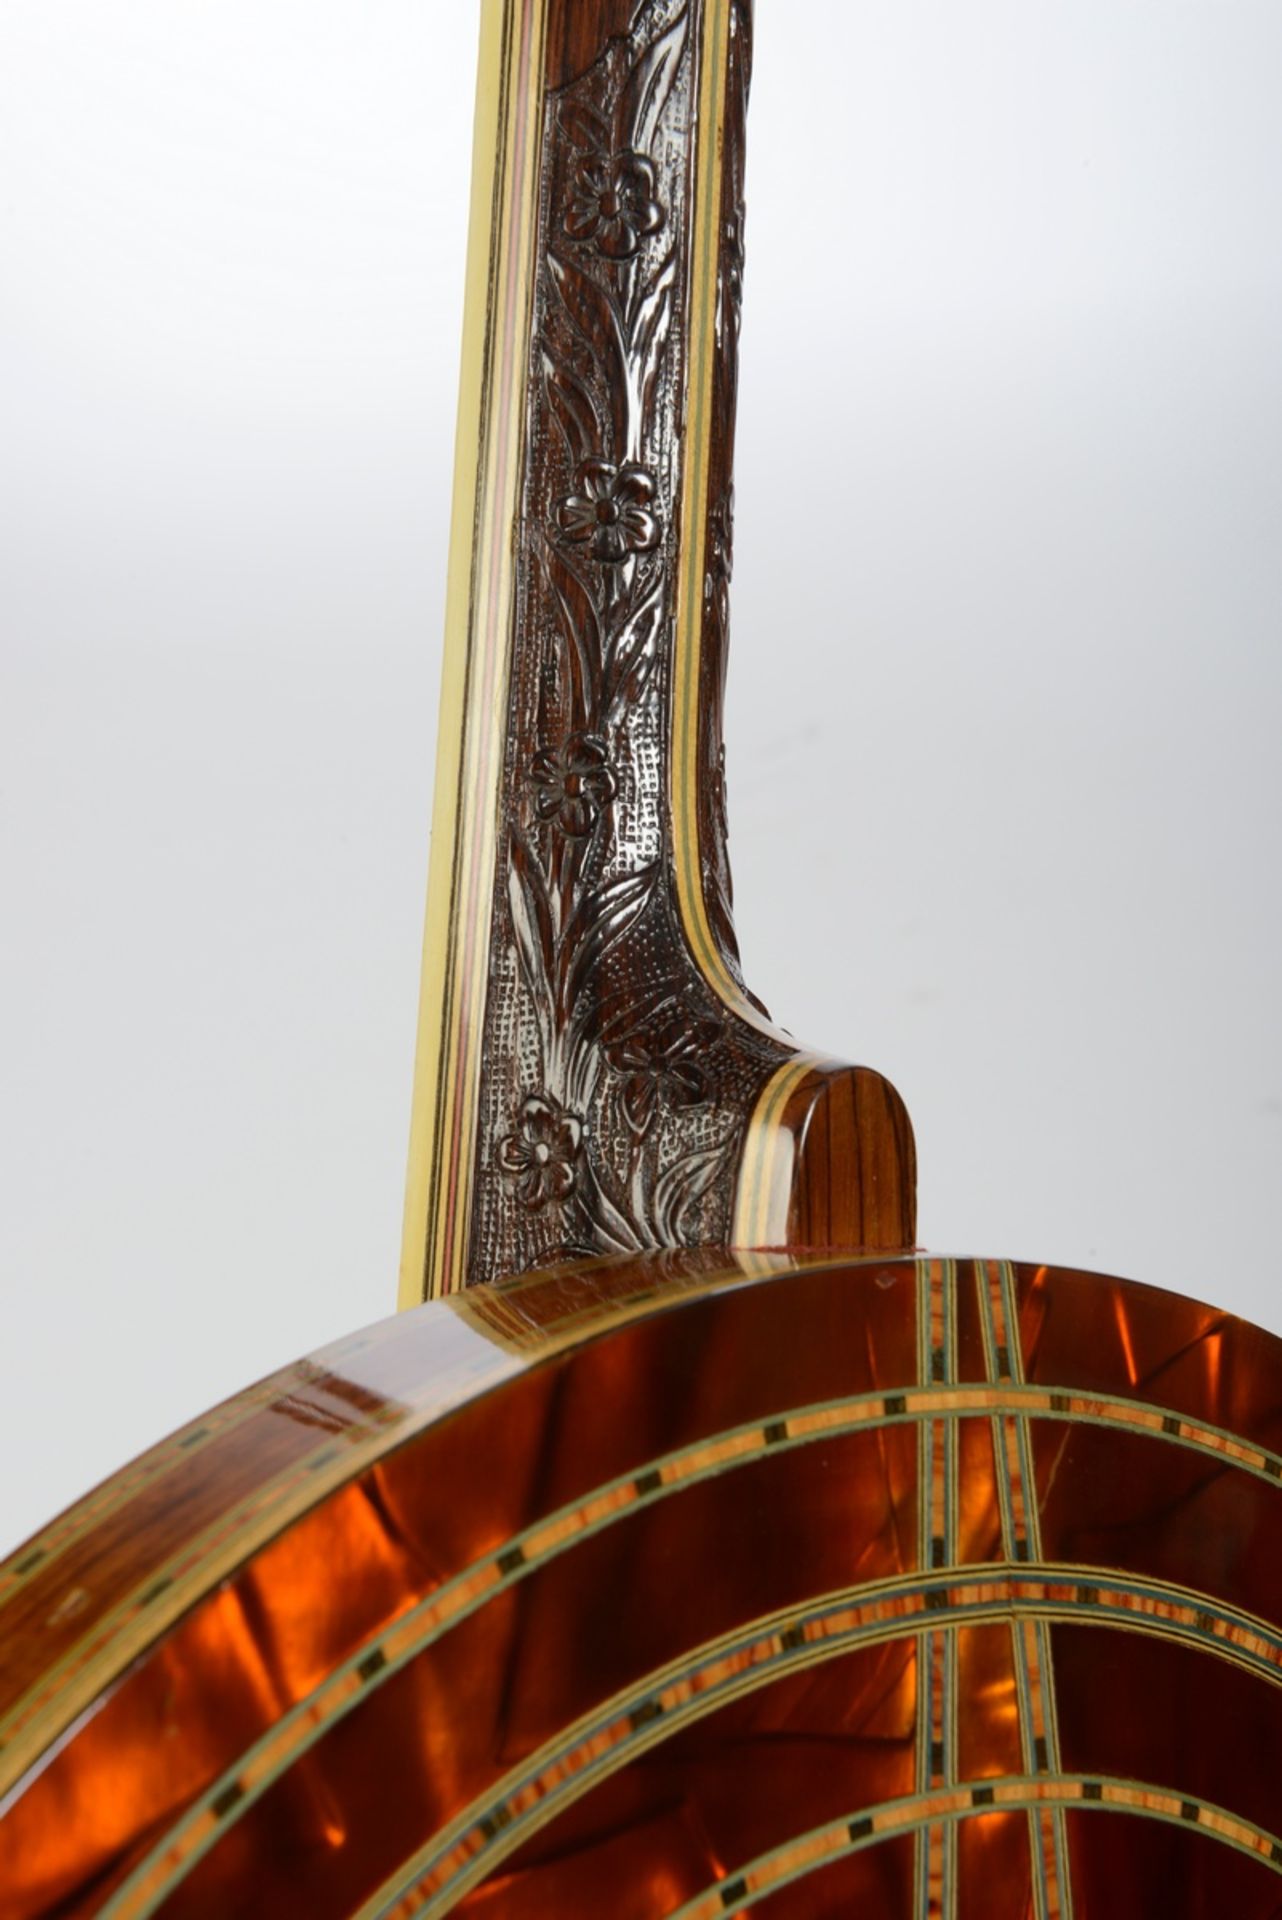 Tenor Banjo, Epiphone Banjo Company, House of Strathopoulo Inc. New York, model Recording Art Conce - Image 10 of 24